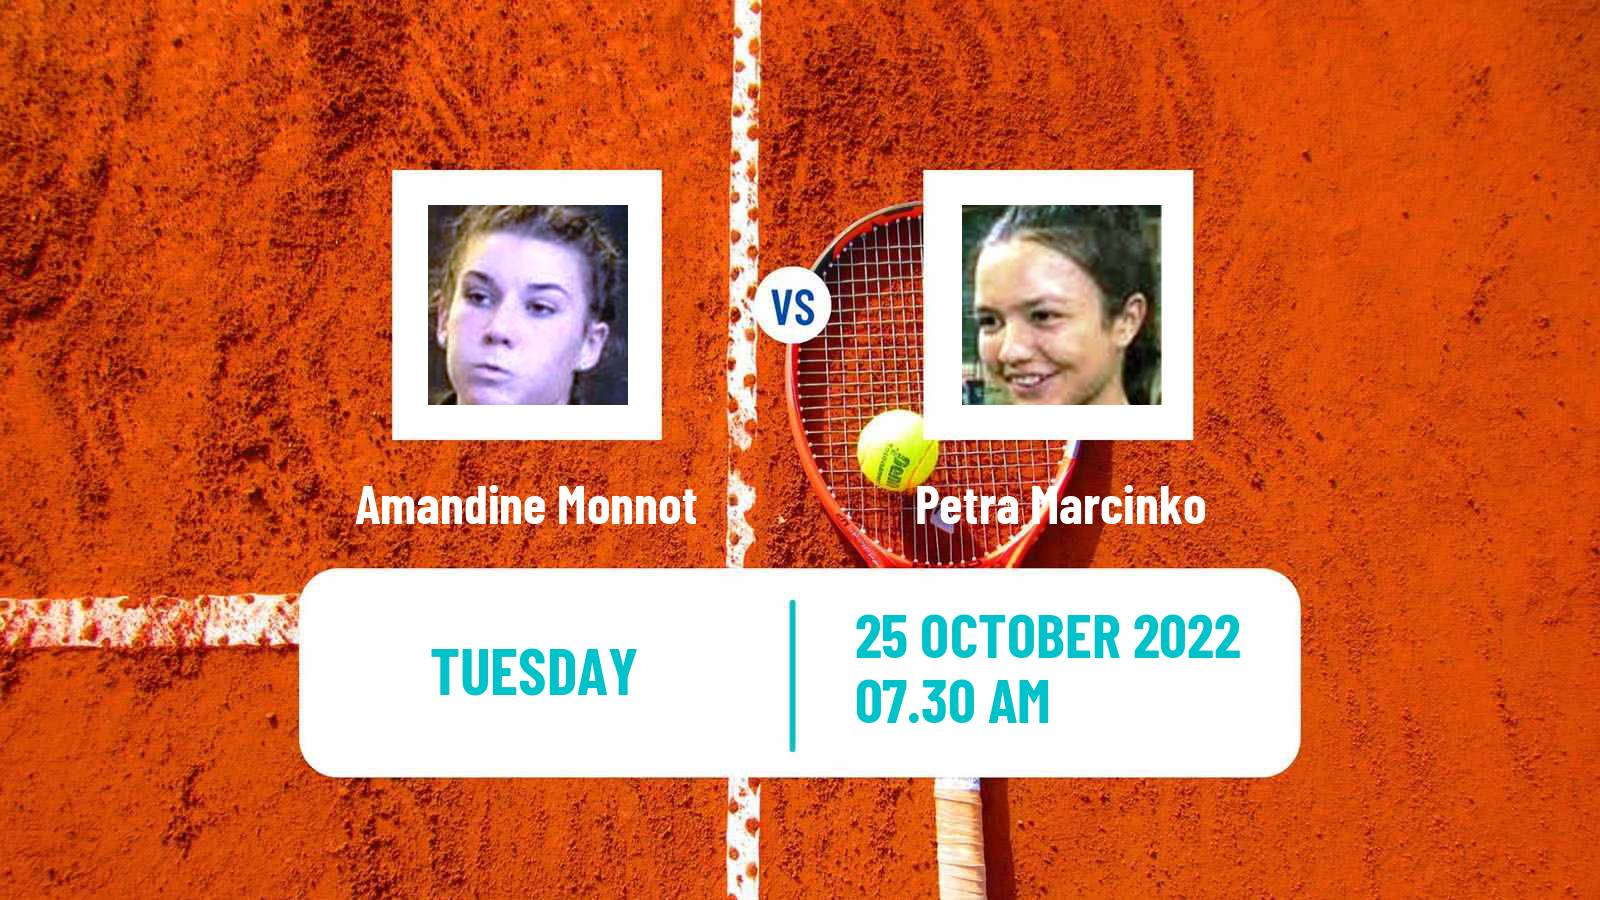 Tennis ITF Tournaments Amandine Monnot - Petra Marcinko